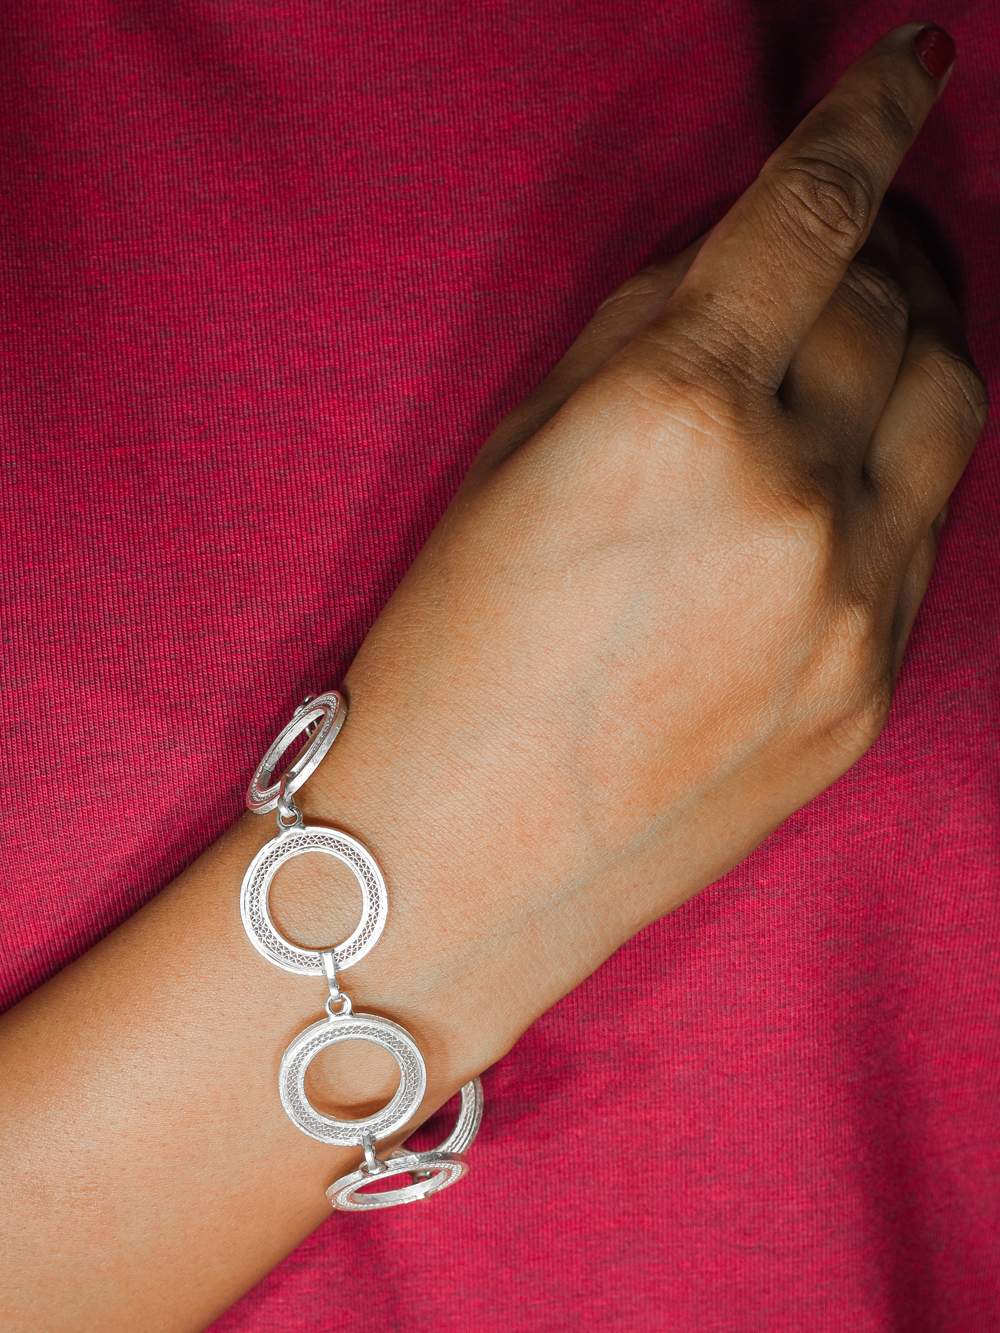 Buy Chain Bracelets Online – Alev Jewelry